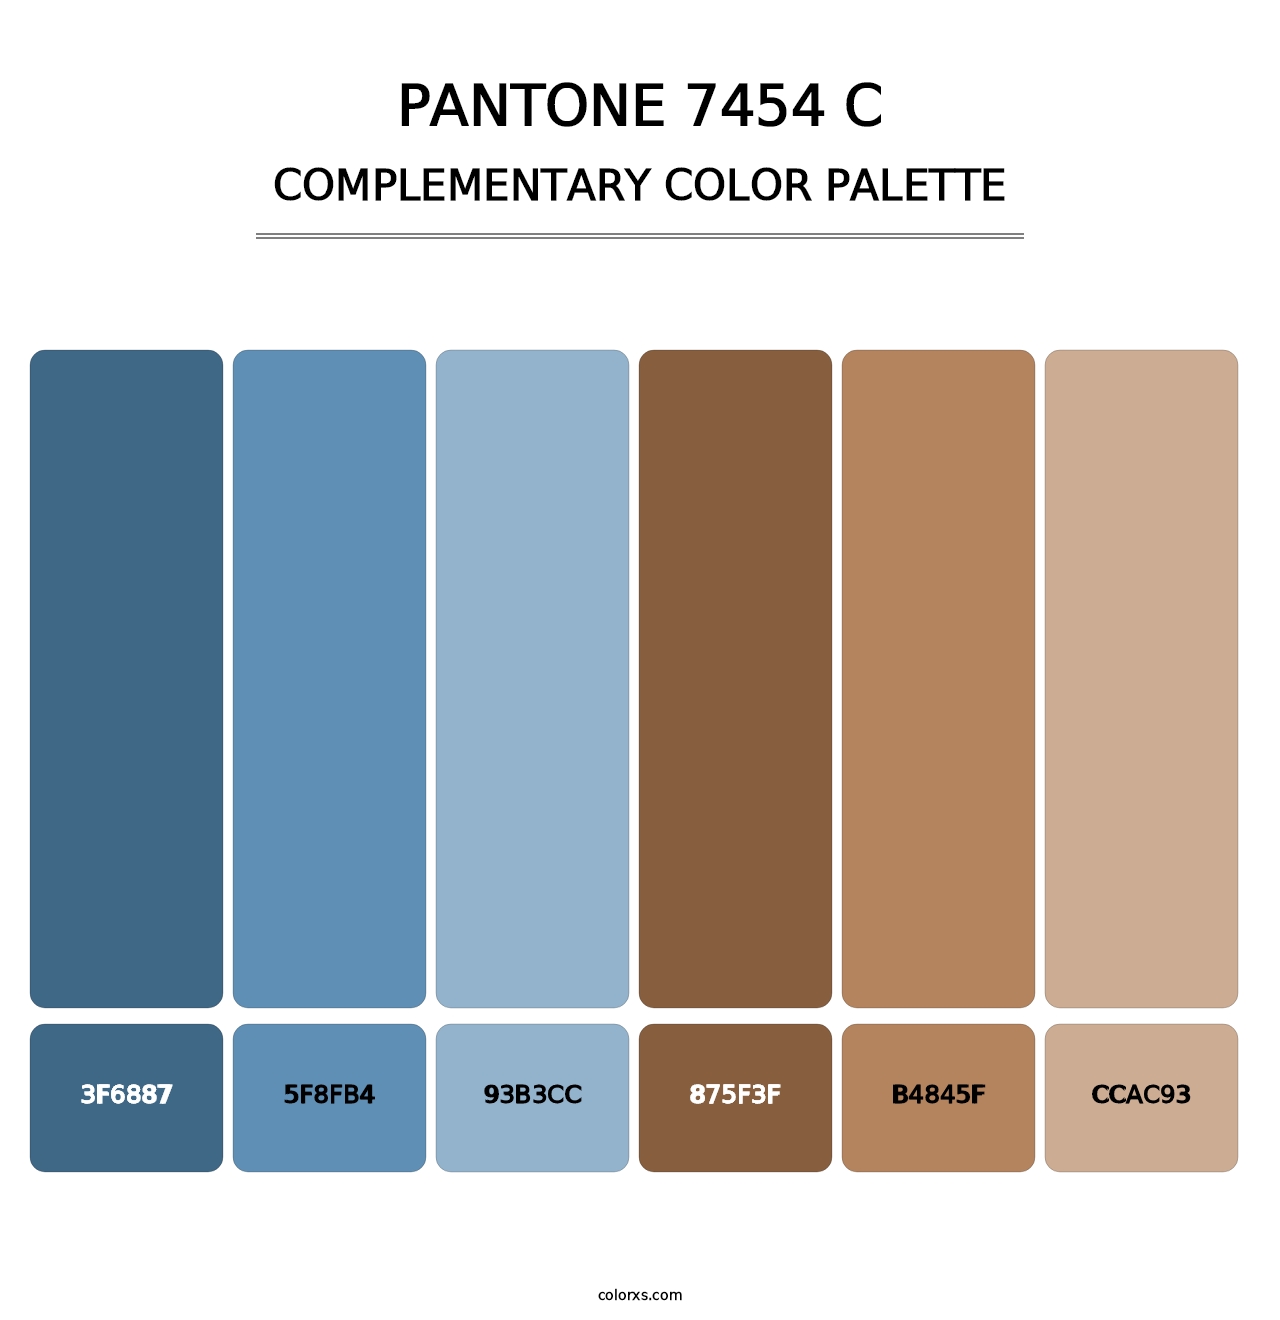 PANTONE 7454 C - Complementary Color Palette